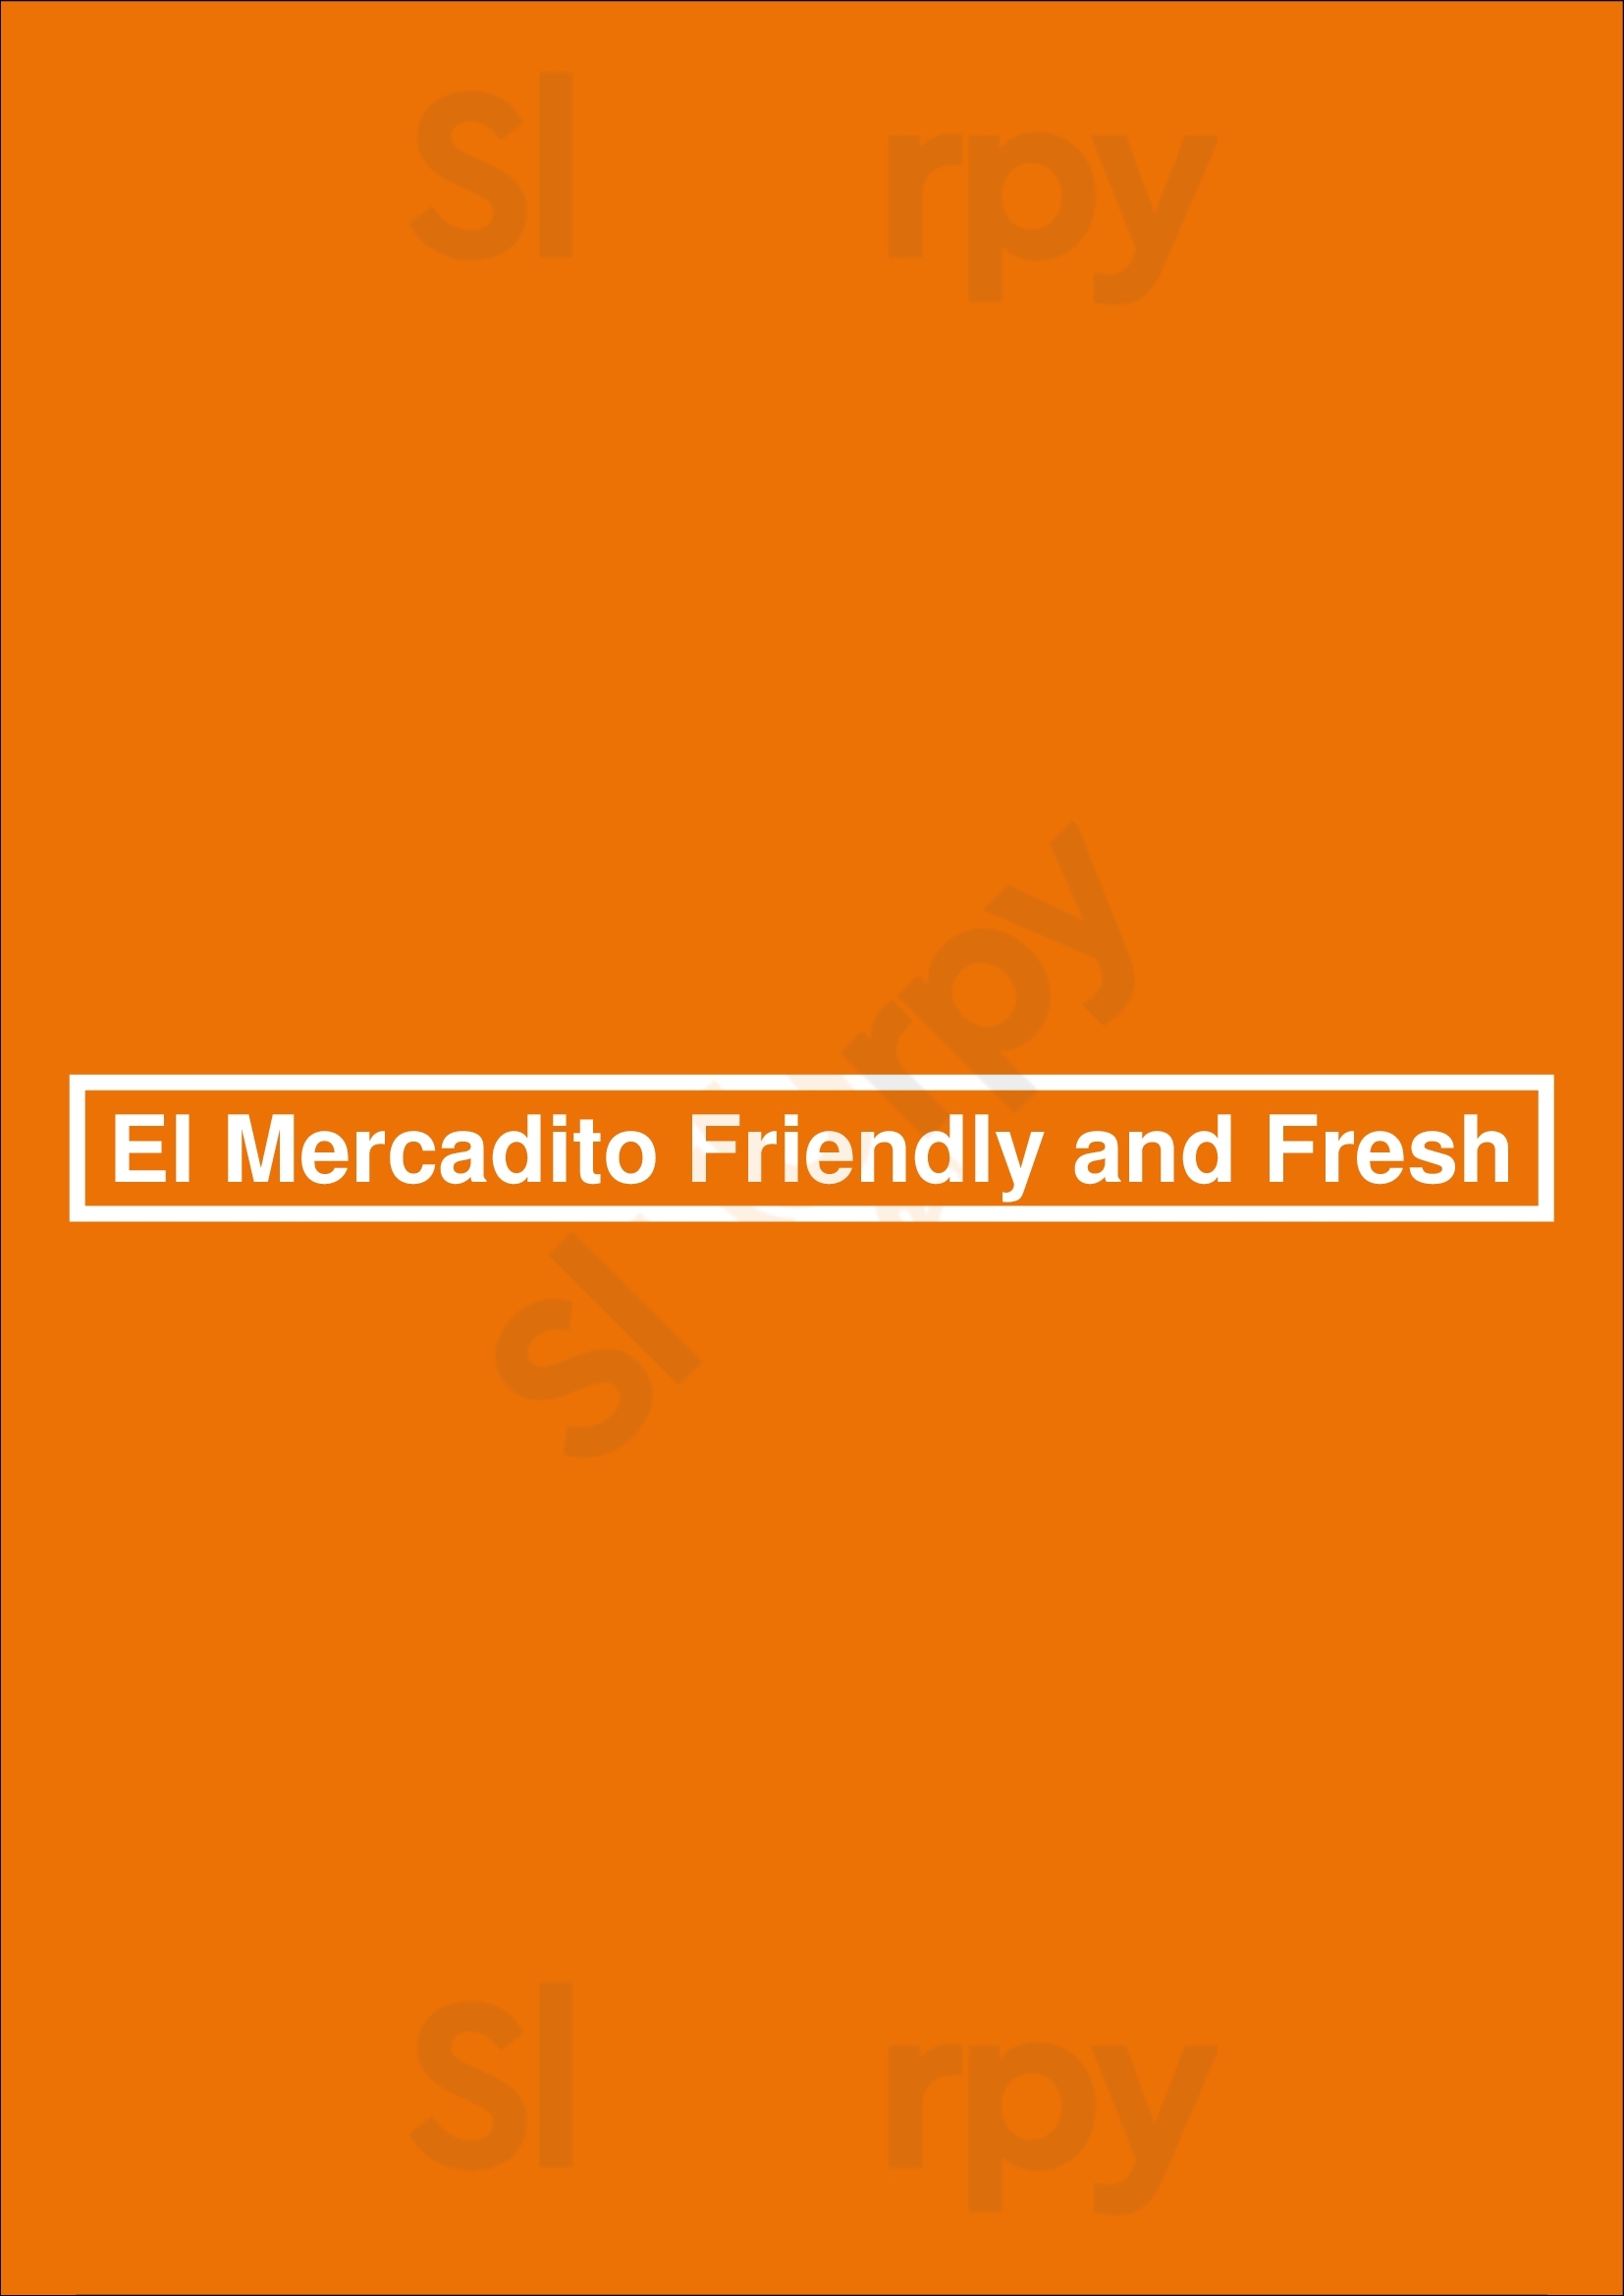 El Mercadito Friendly And Fresh Mendoza Menu - 1